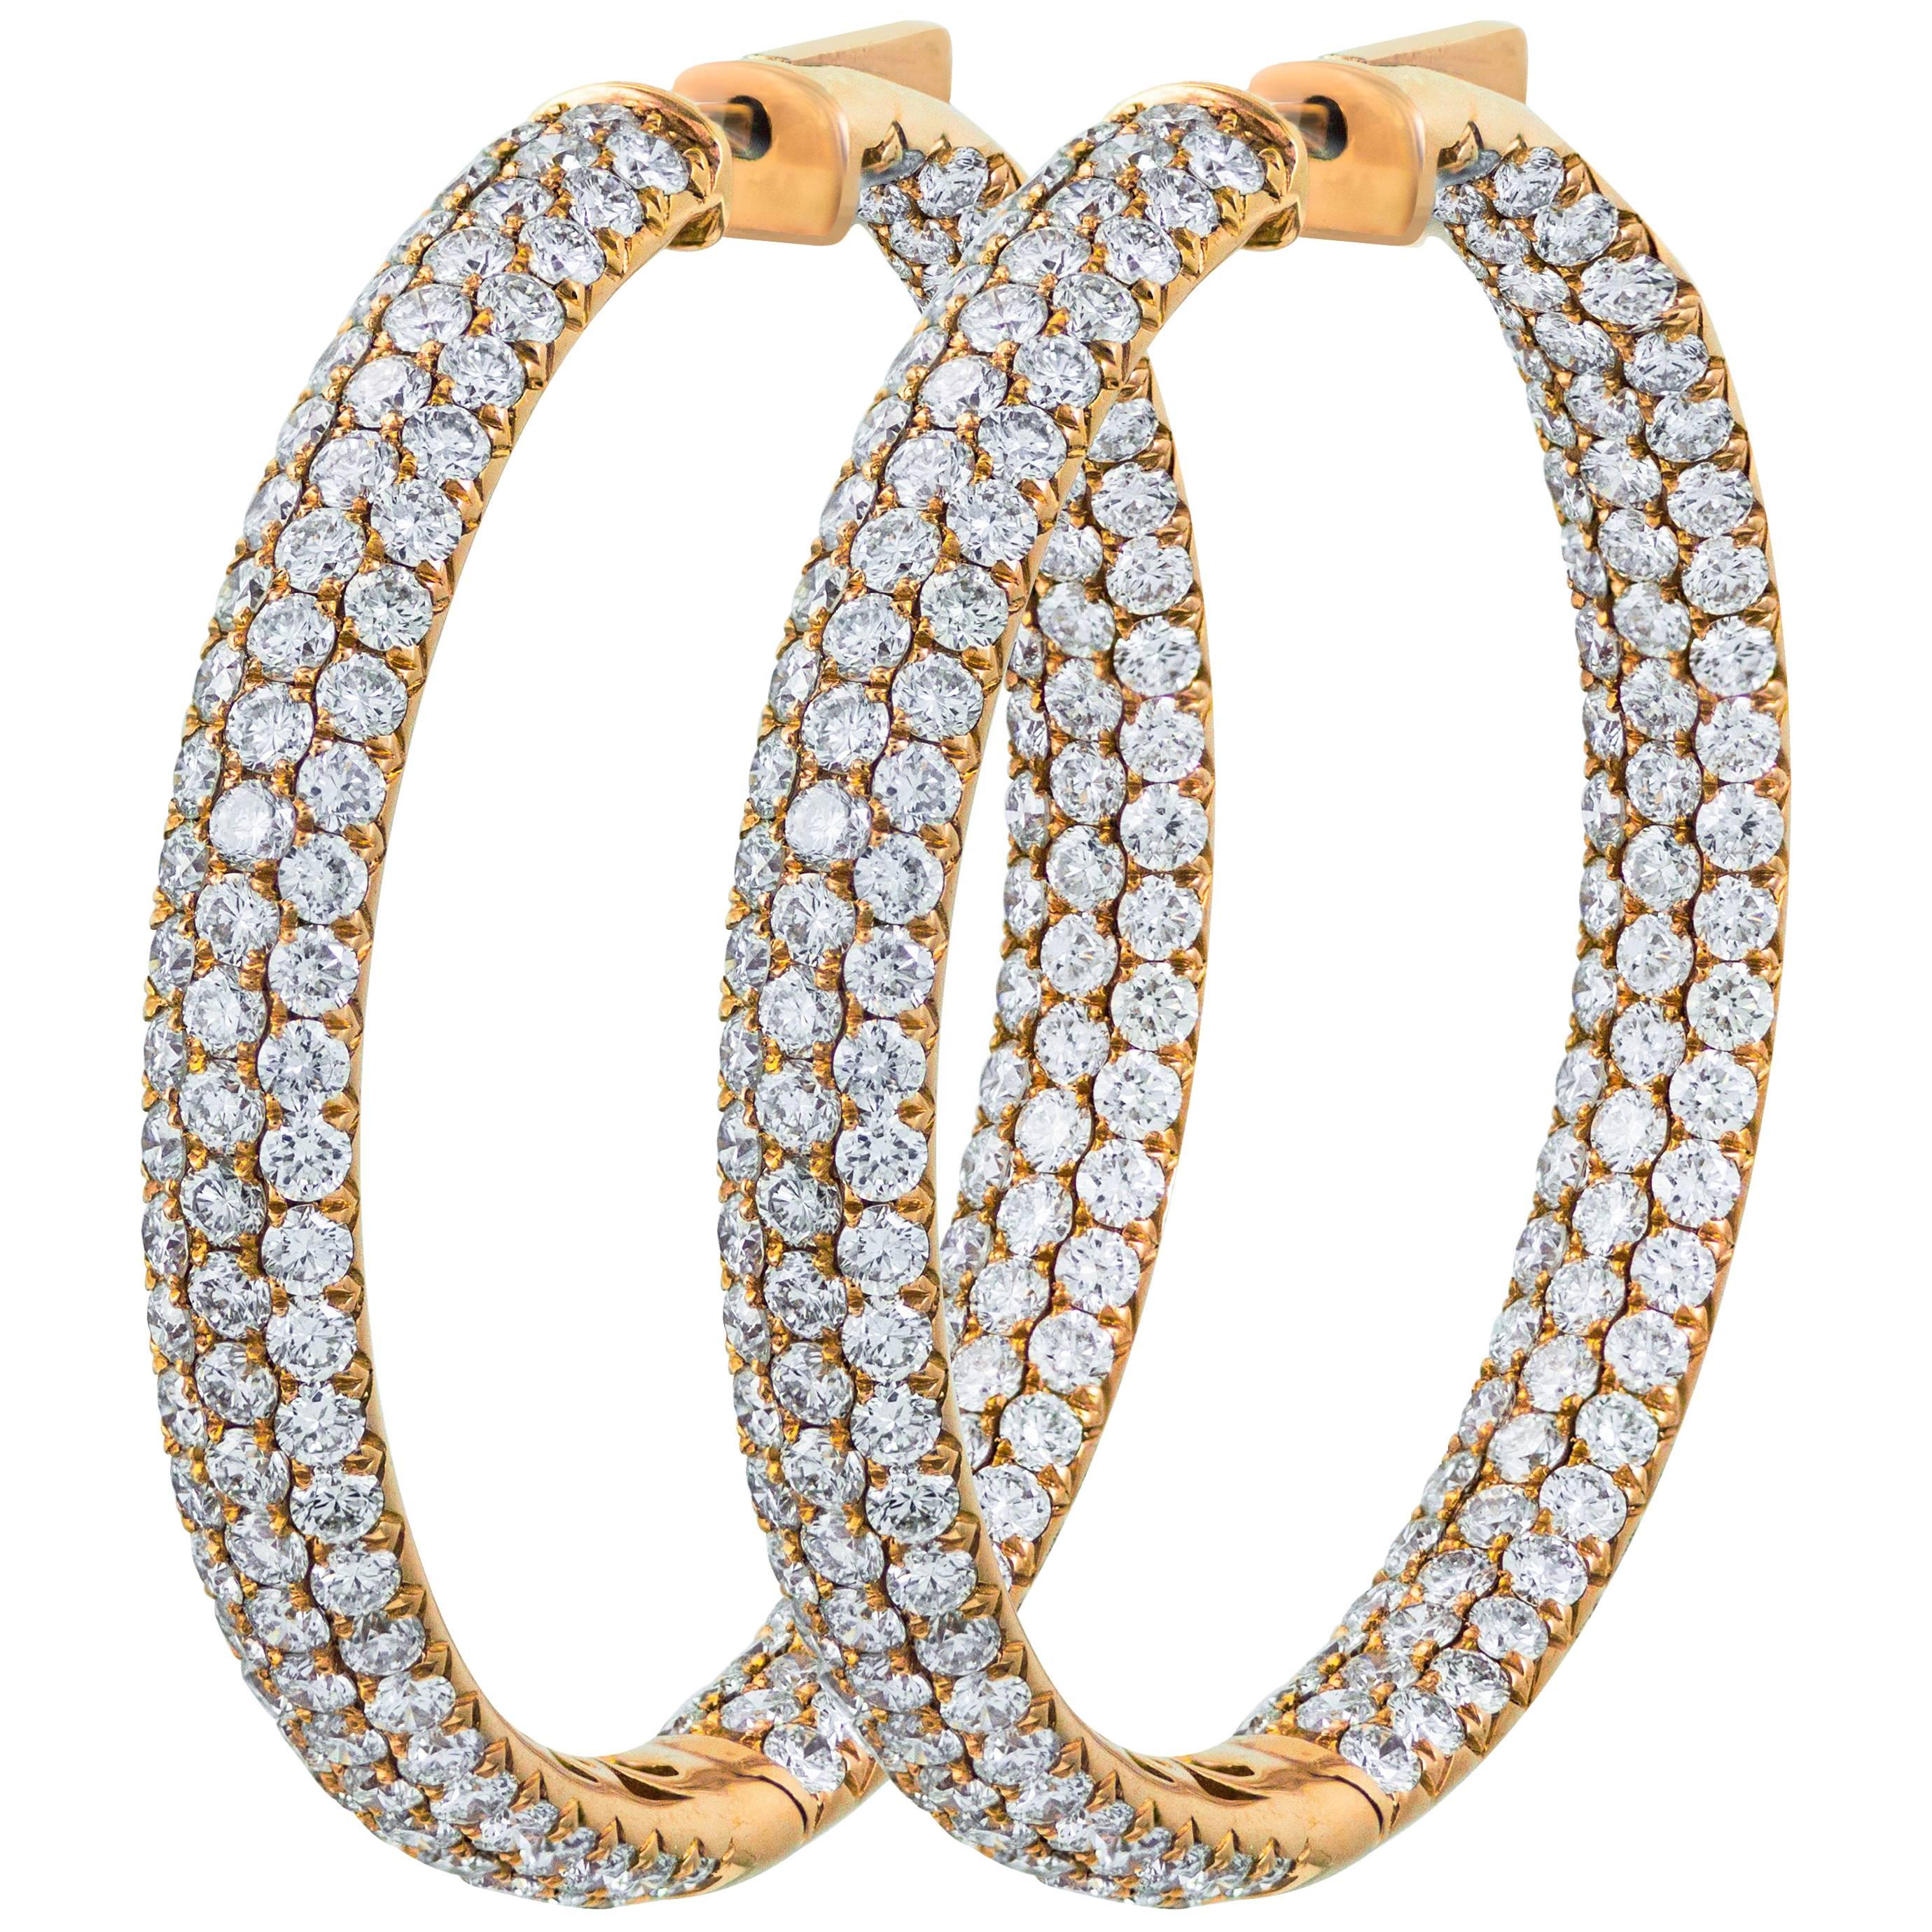 Roman Malakov 9.55 Carats Total Round Diamond Pave Set Hoop Earrings For Sale